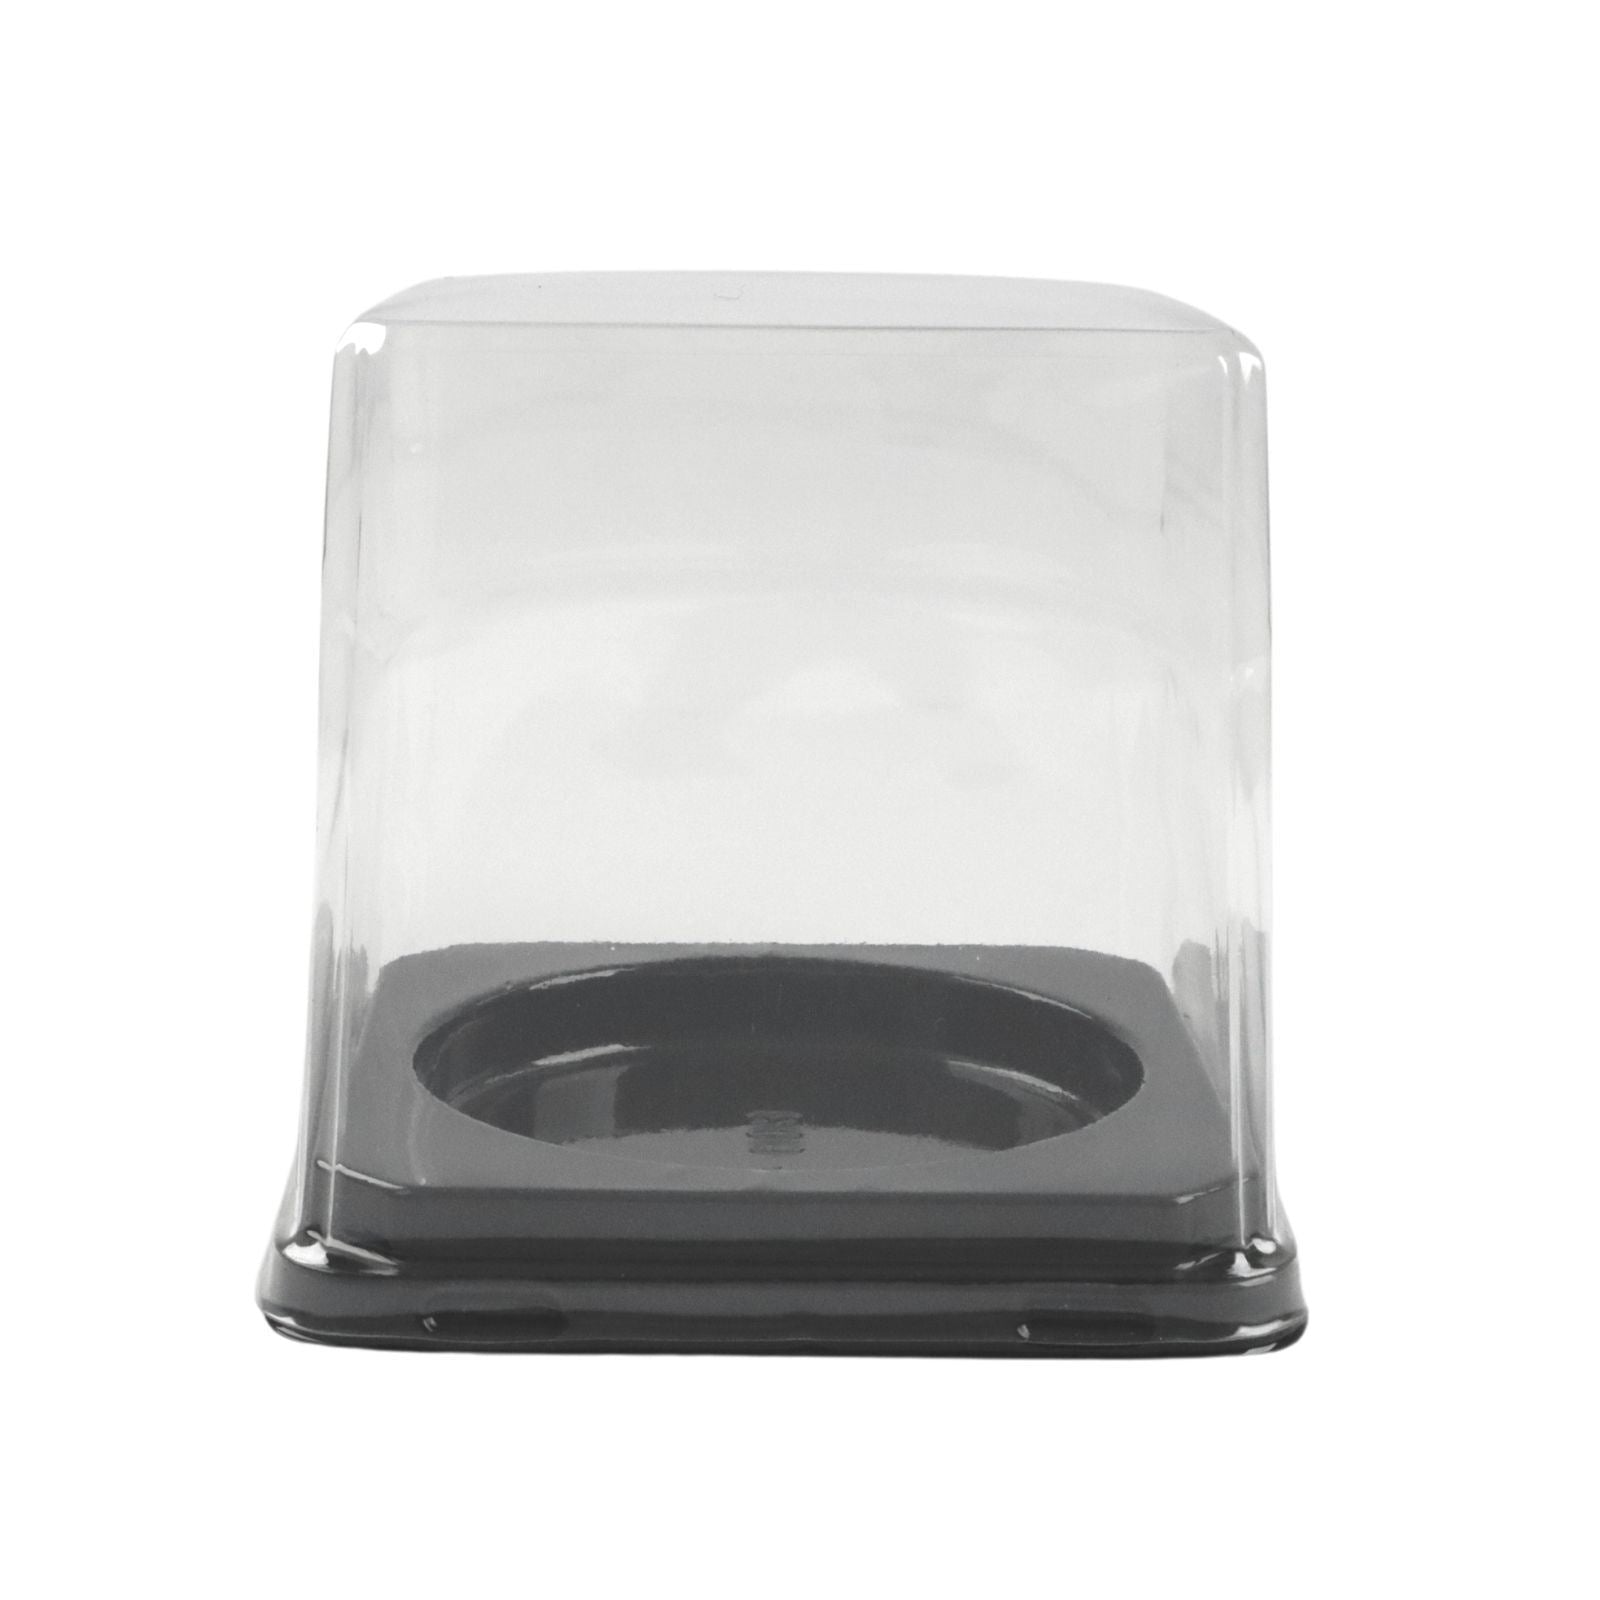 Mini Bento Cake Display Box - Clear Transparent PVC 4 Inch